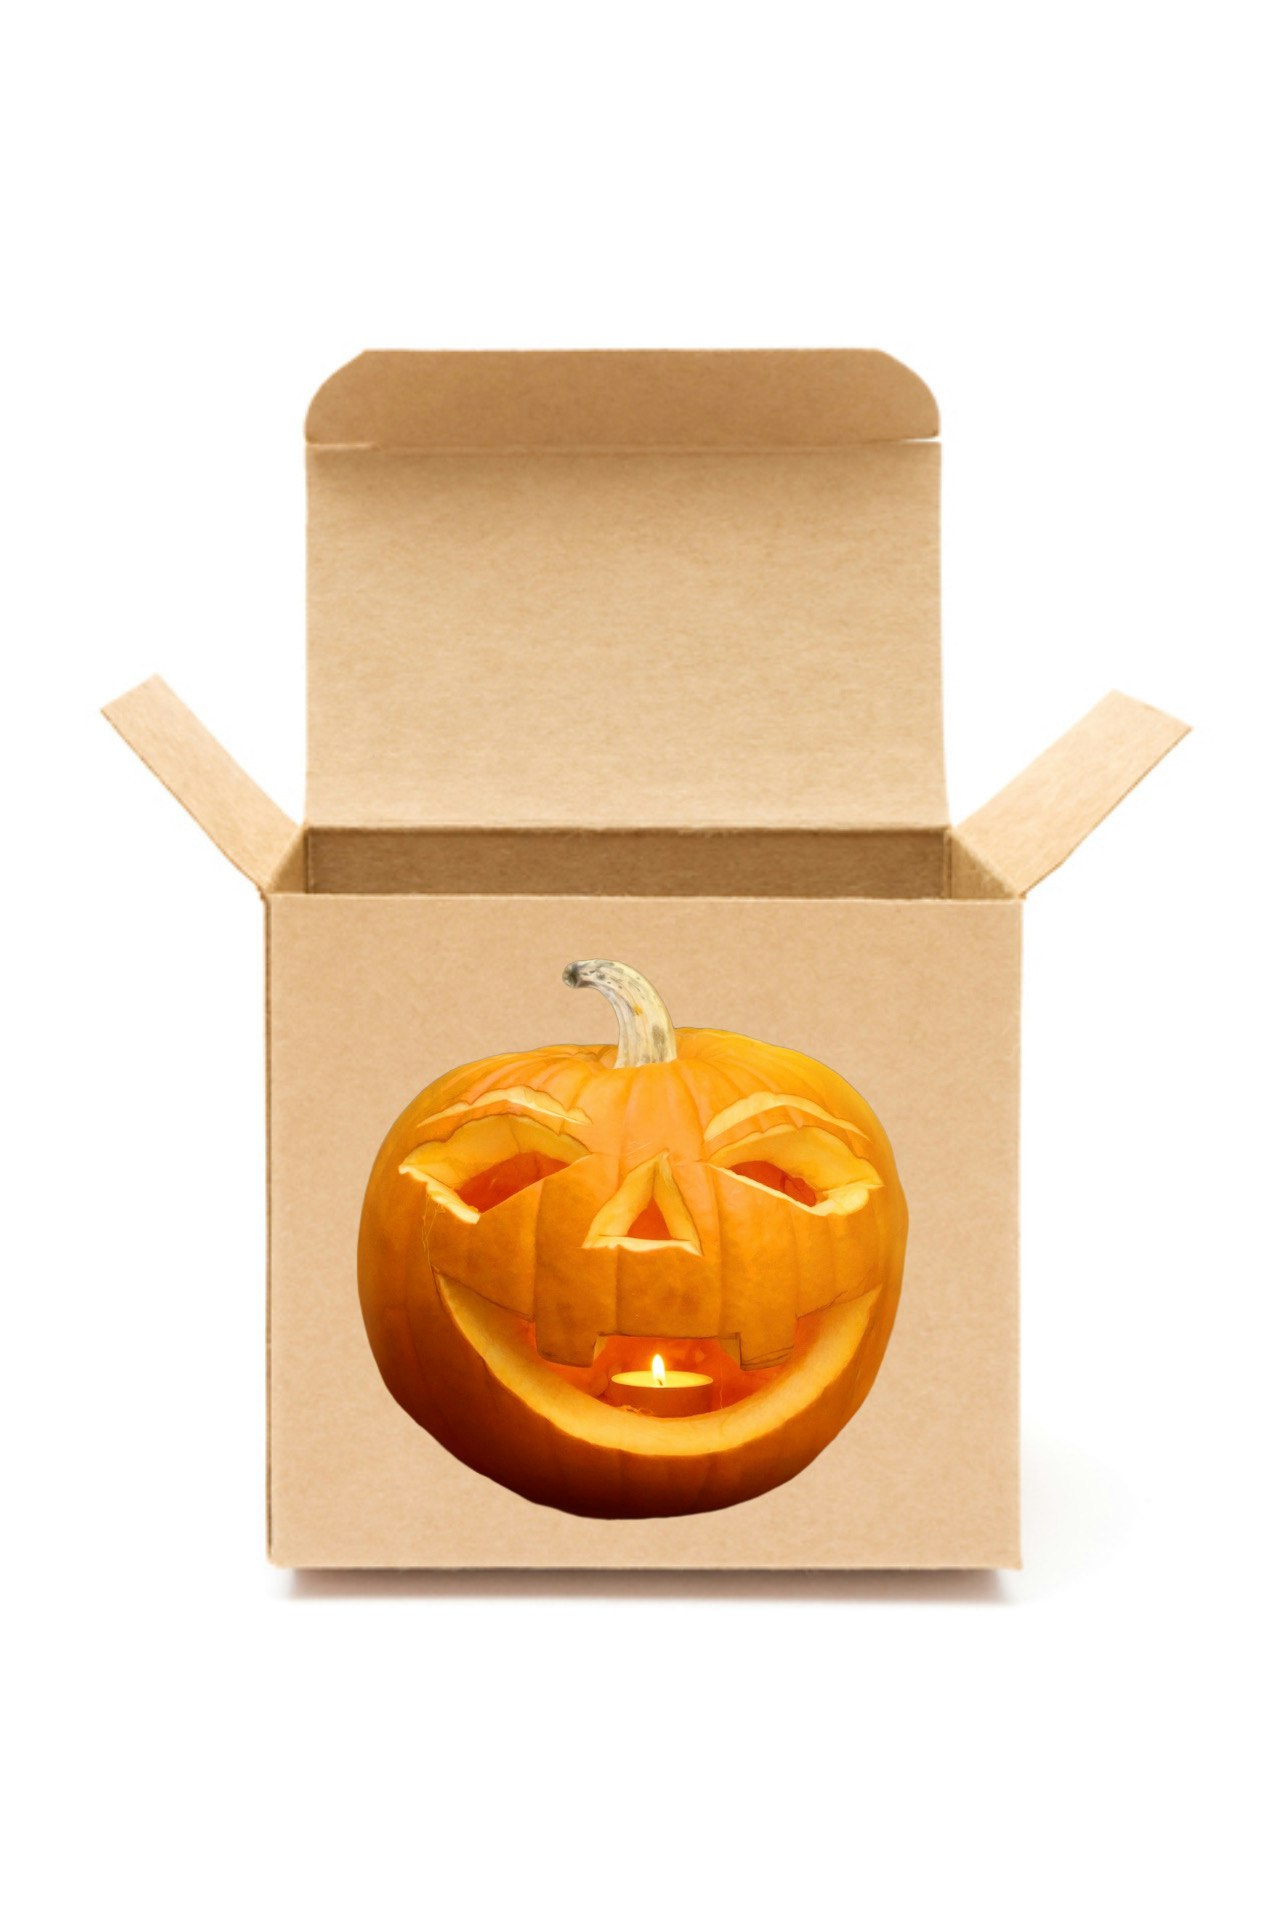 Pumpkin box 3